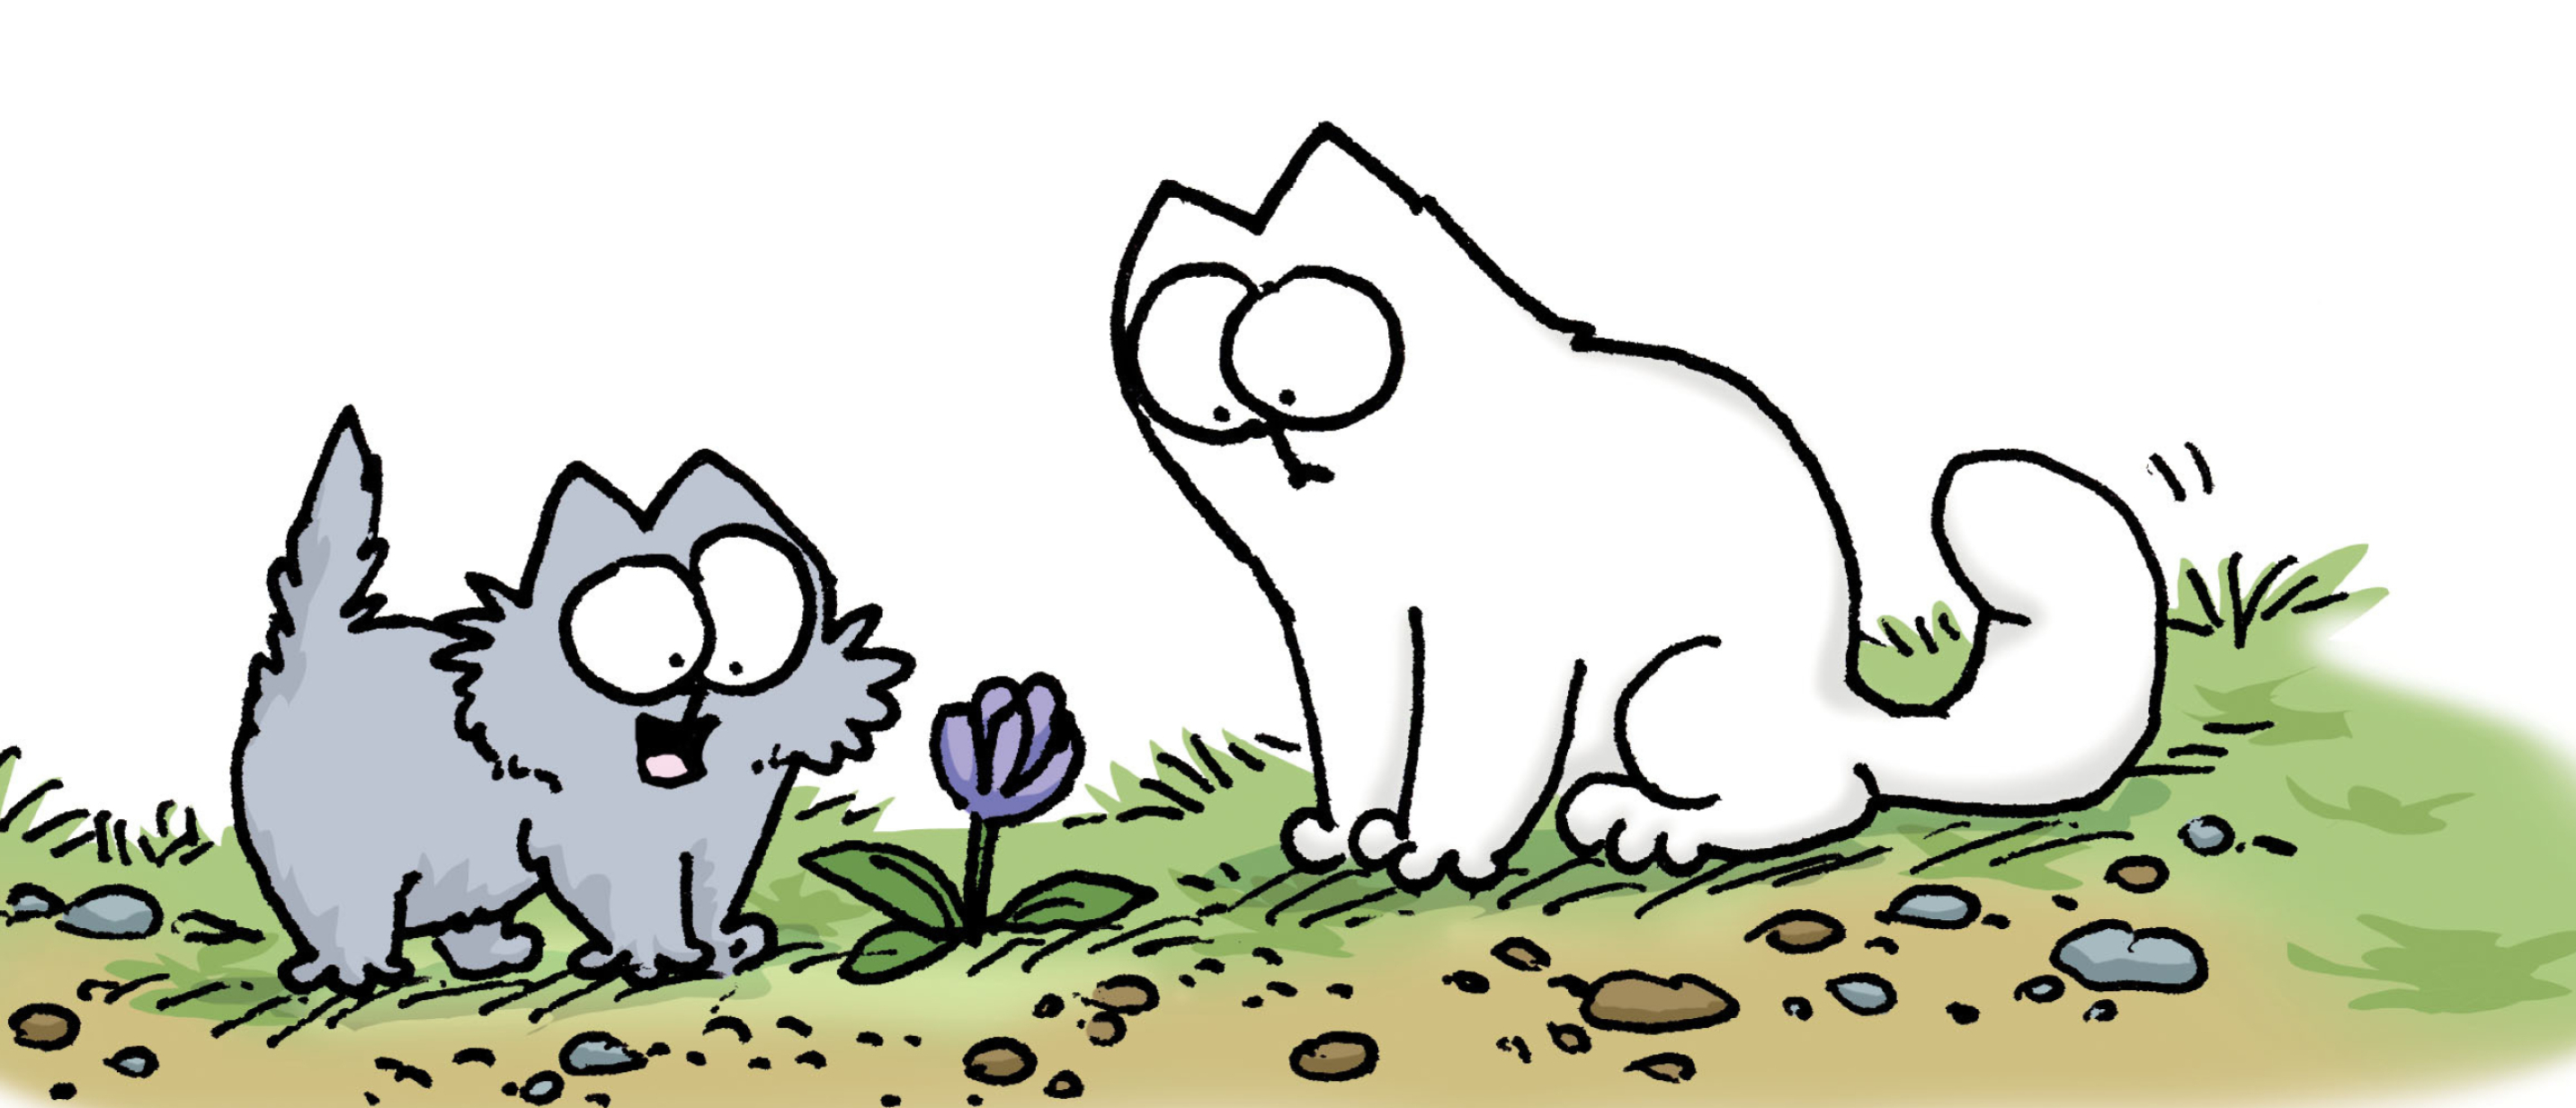 Simon's cat, Flower gazing, Observing nature, Curious feline, 2870x1240 Dual Screen Desktop